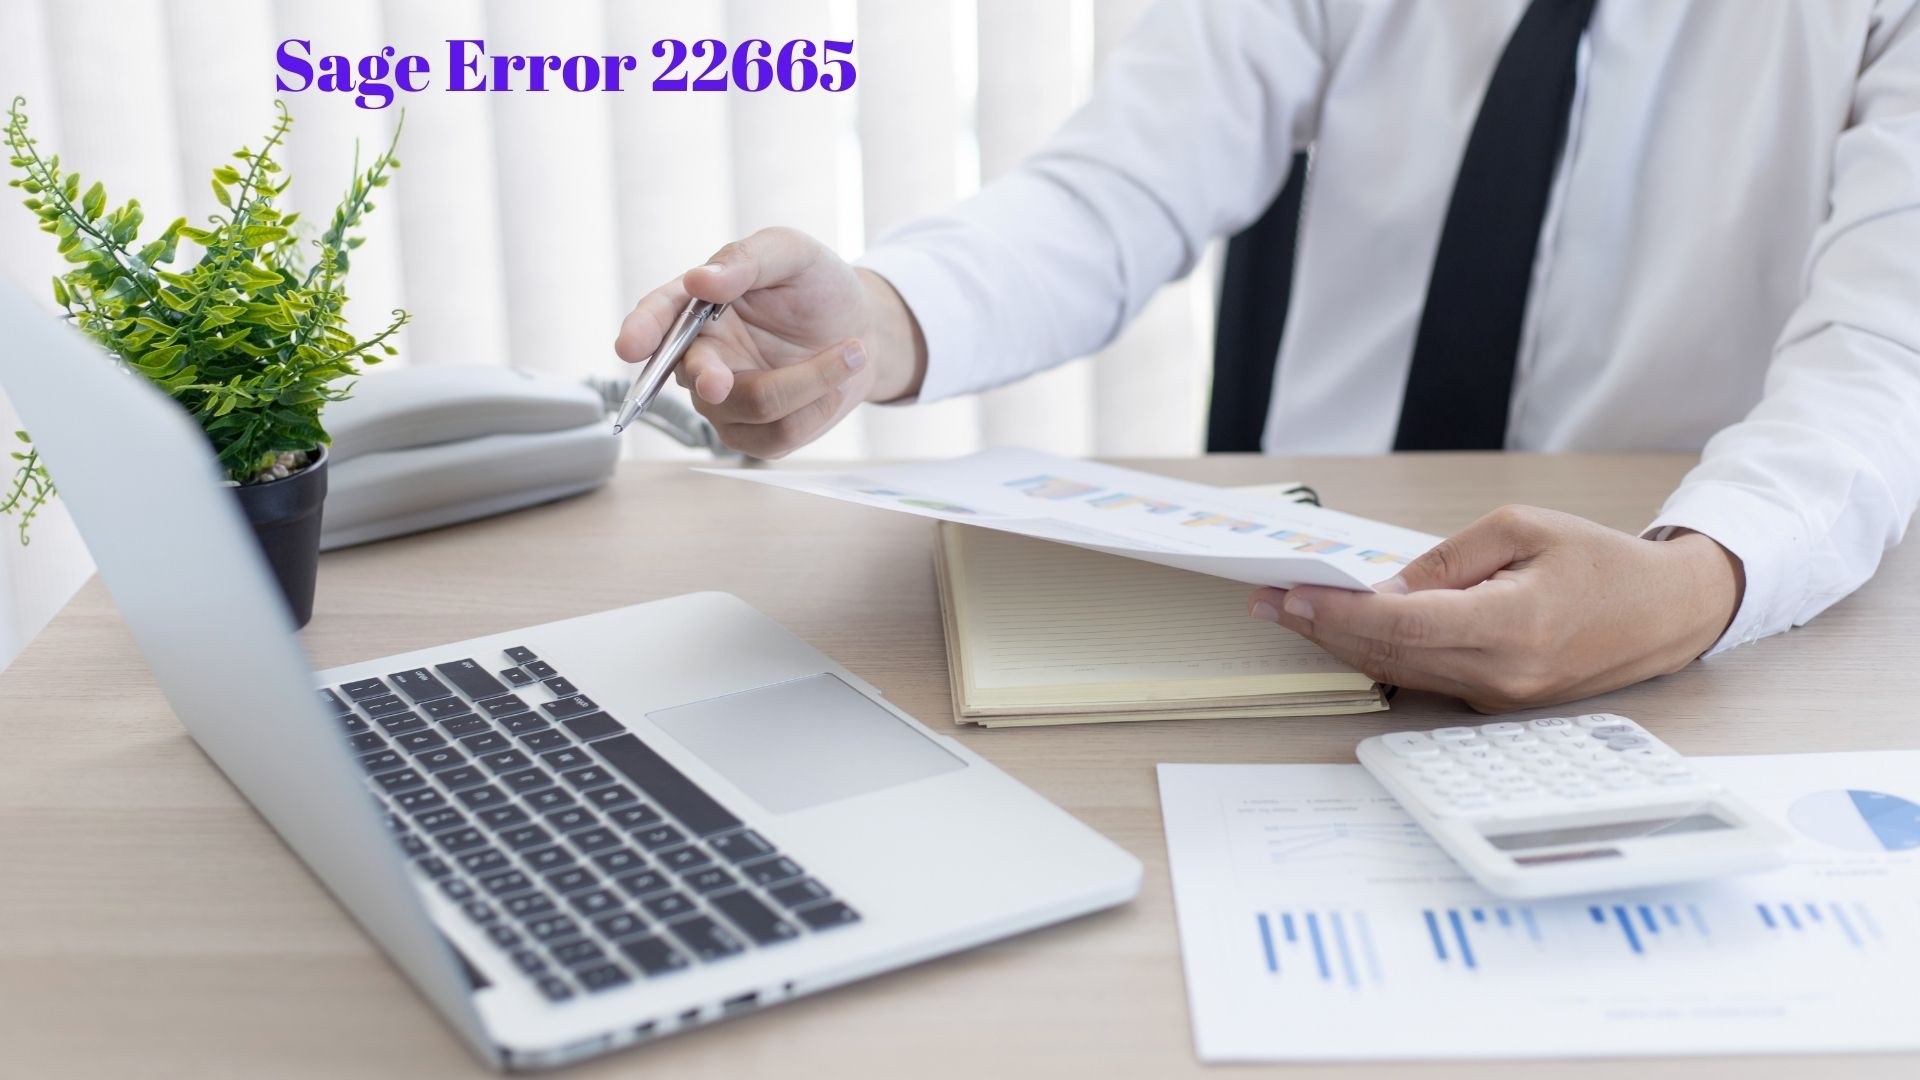 Methods To Recover Sage Error 22665